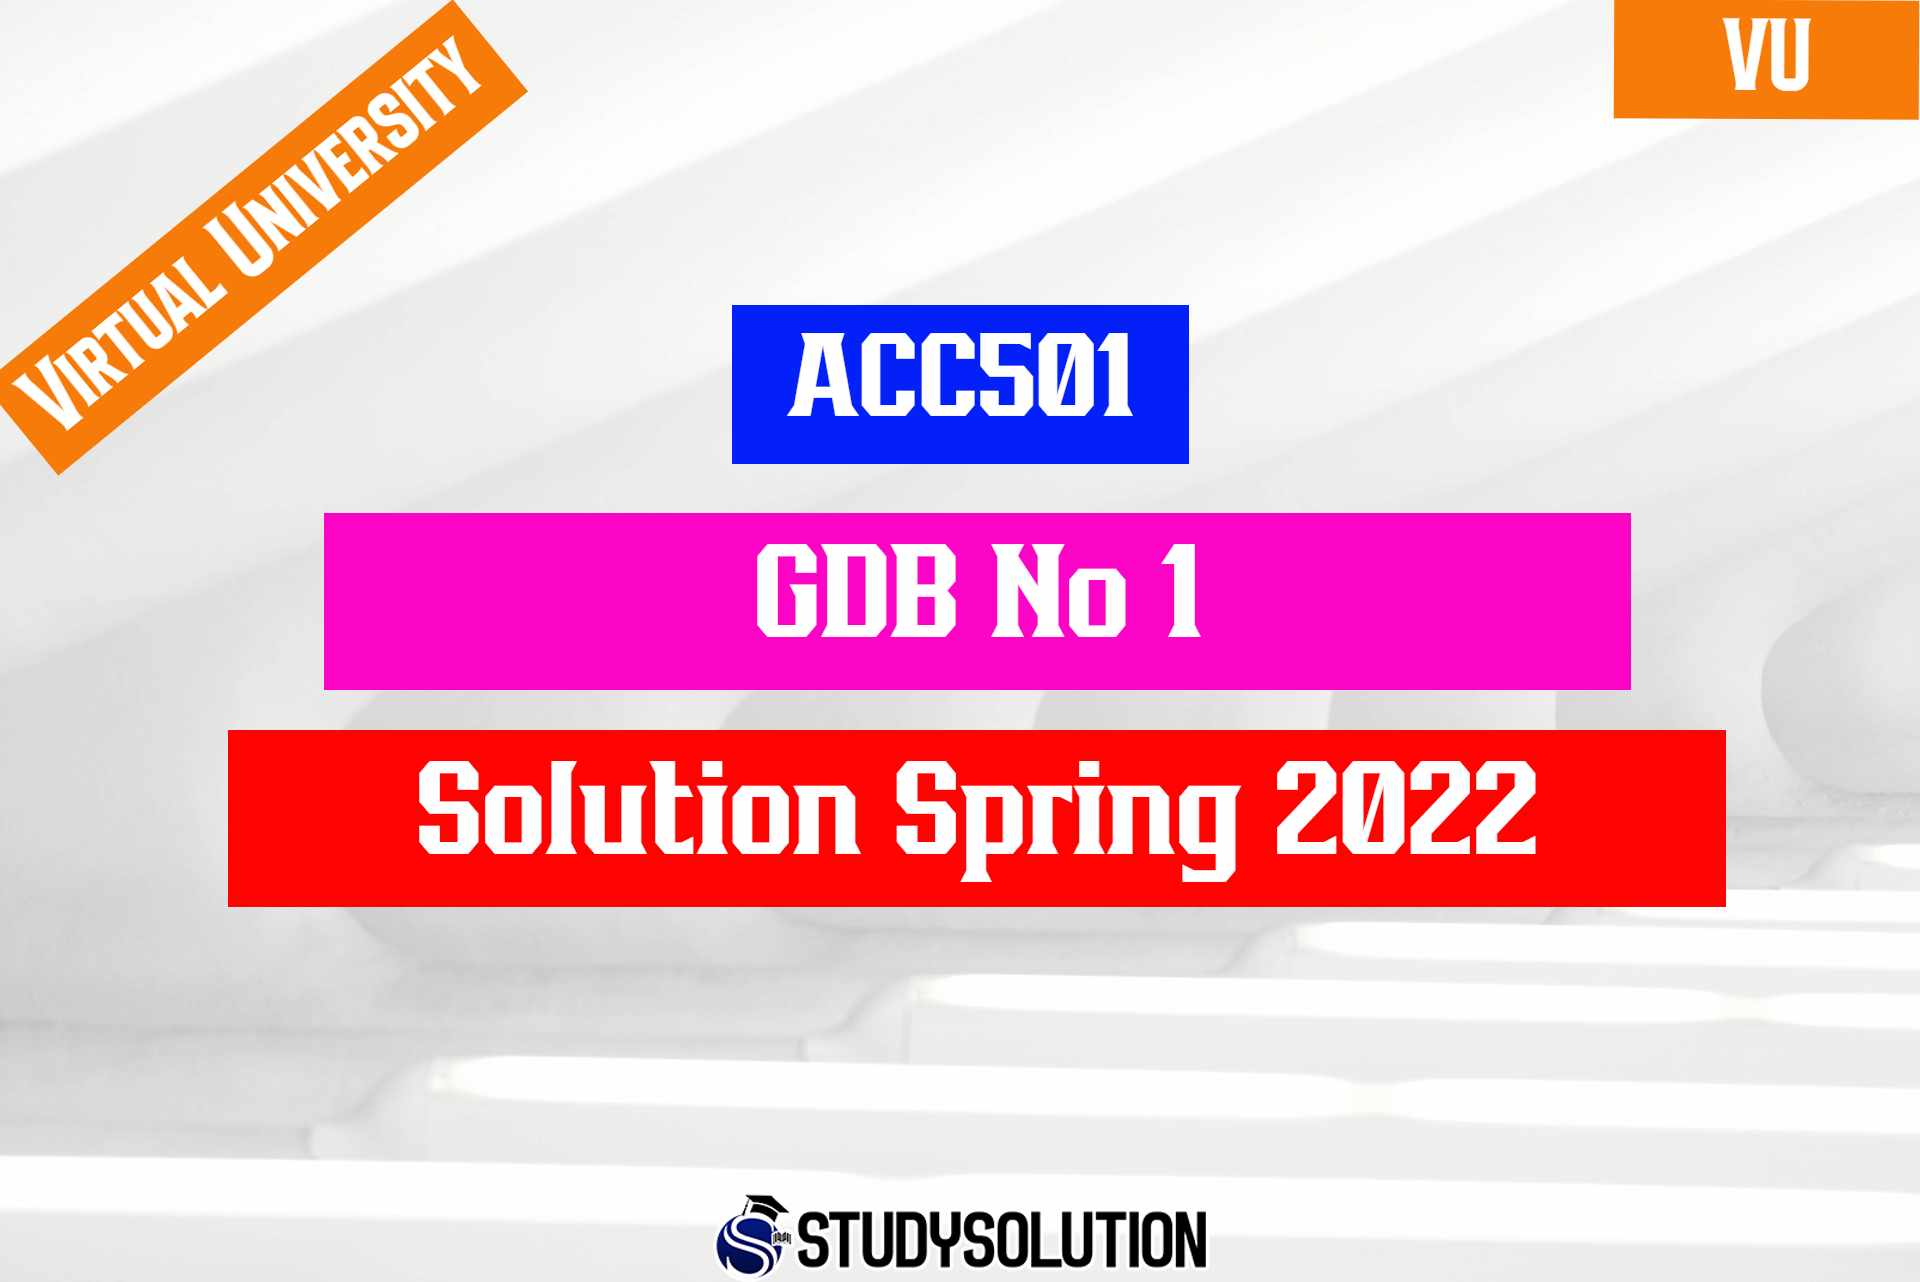 ACC501 GDB No 1 Solution Spring 2022